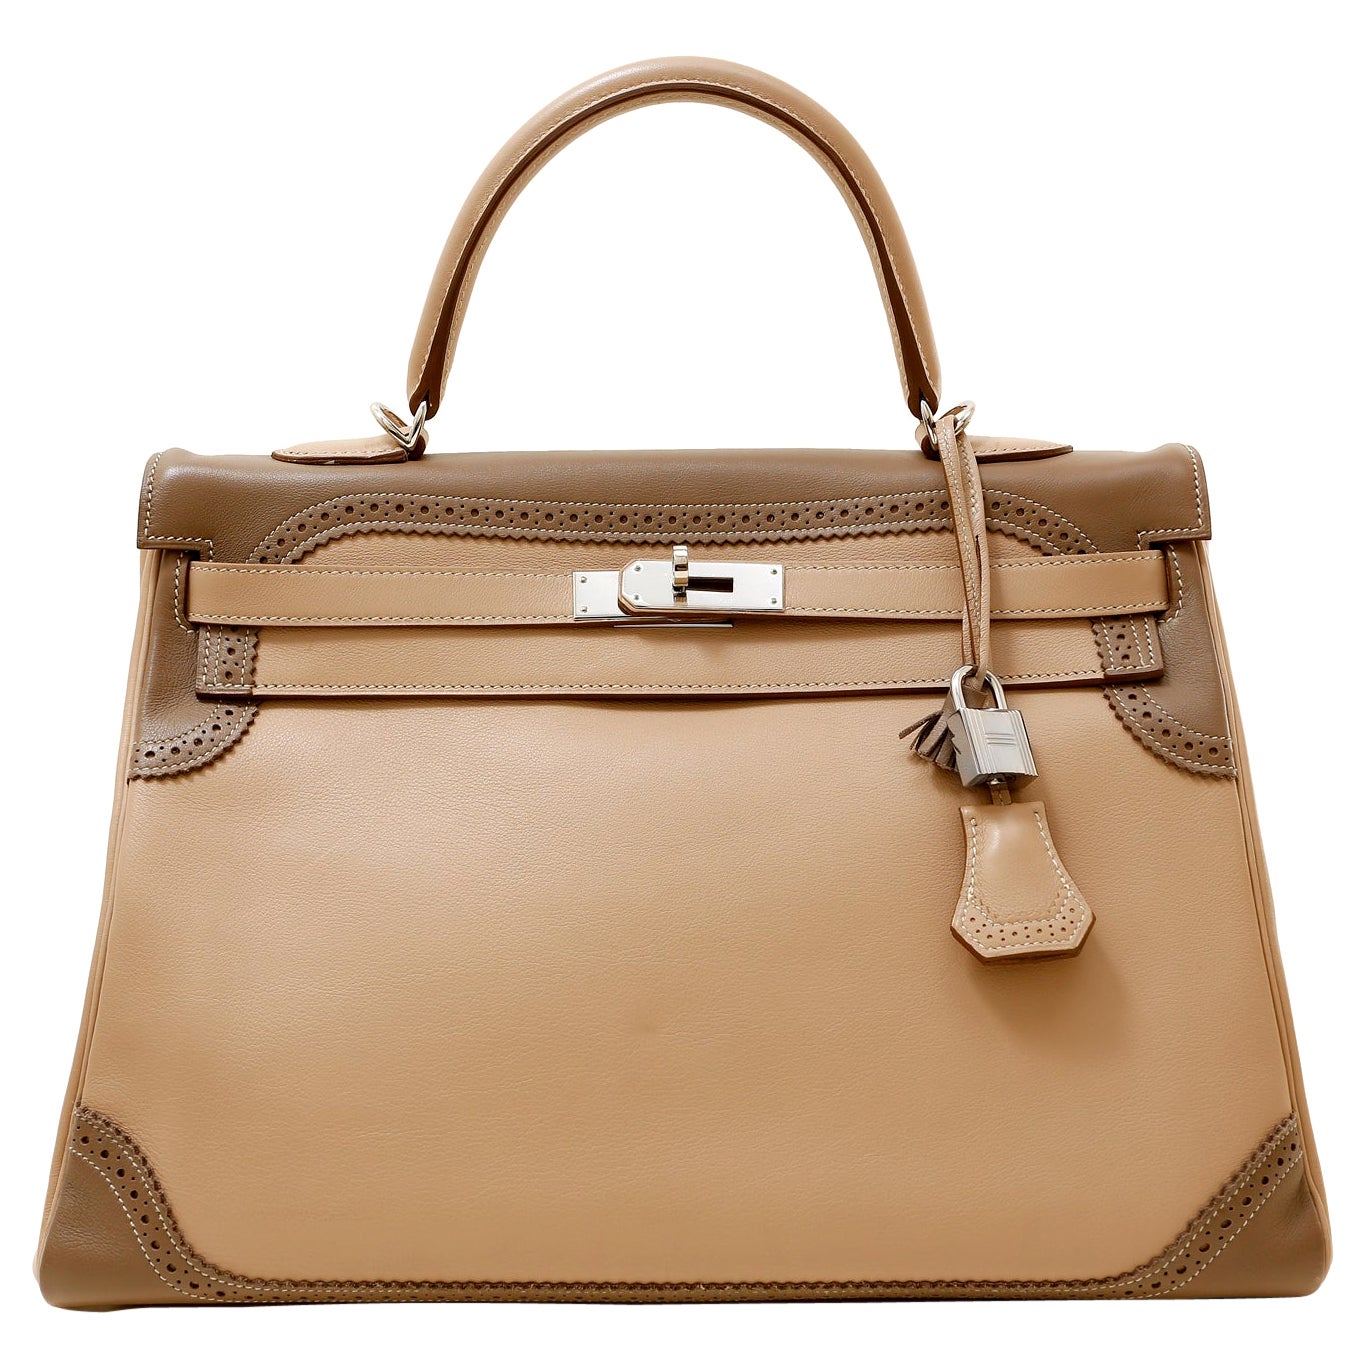  Hermès Etoupe Etain Swift Ghillies 35 cm Limited Edition Kelly Bag